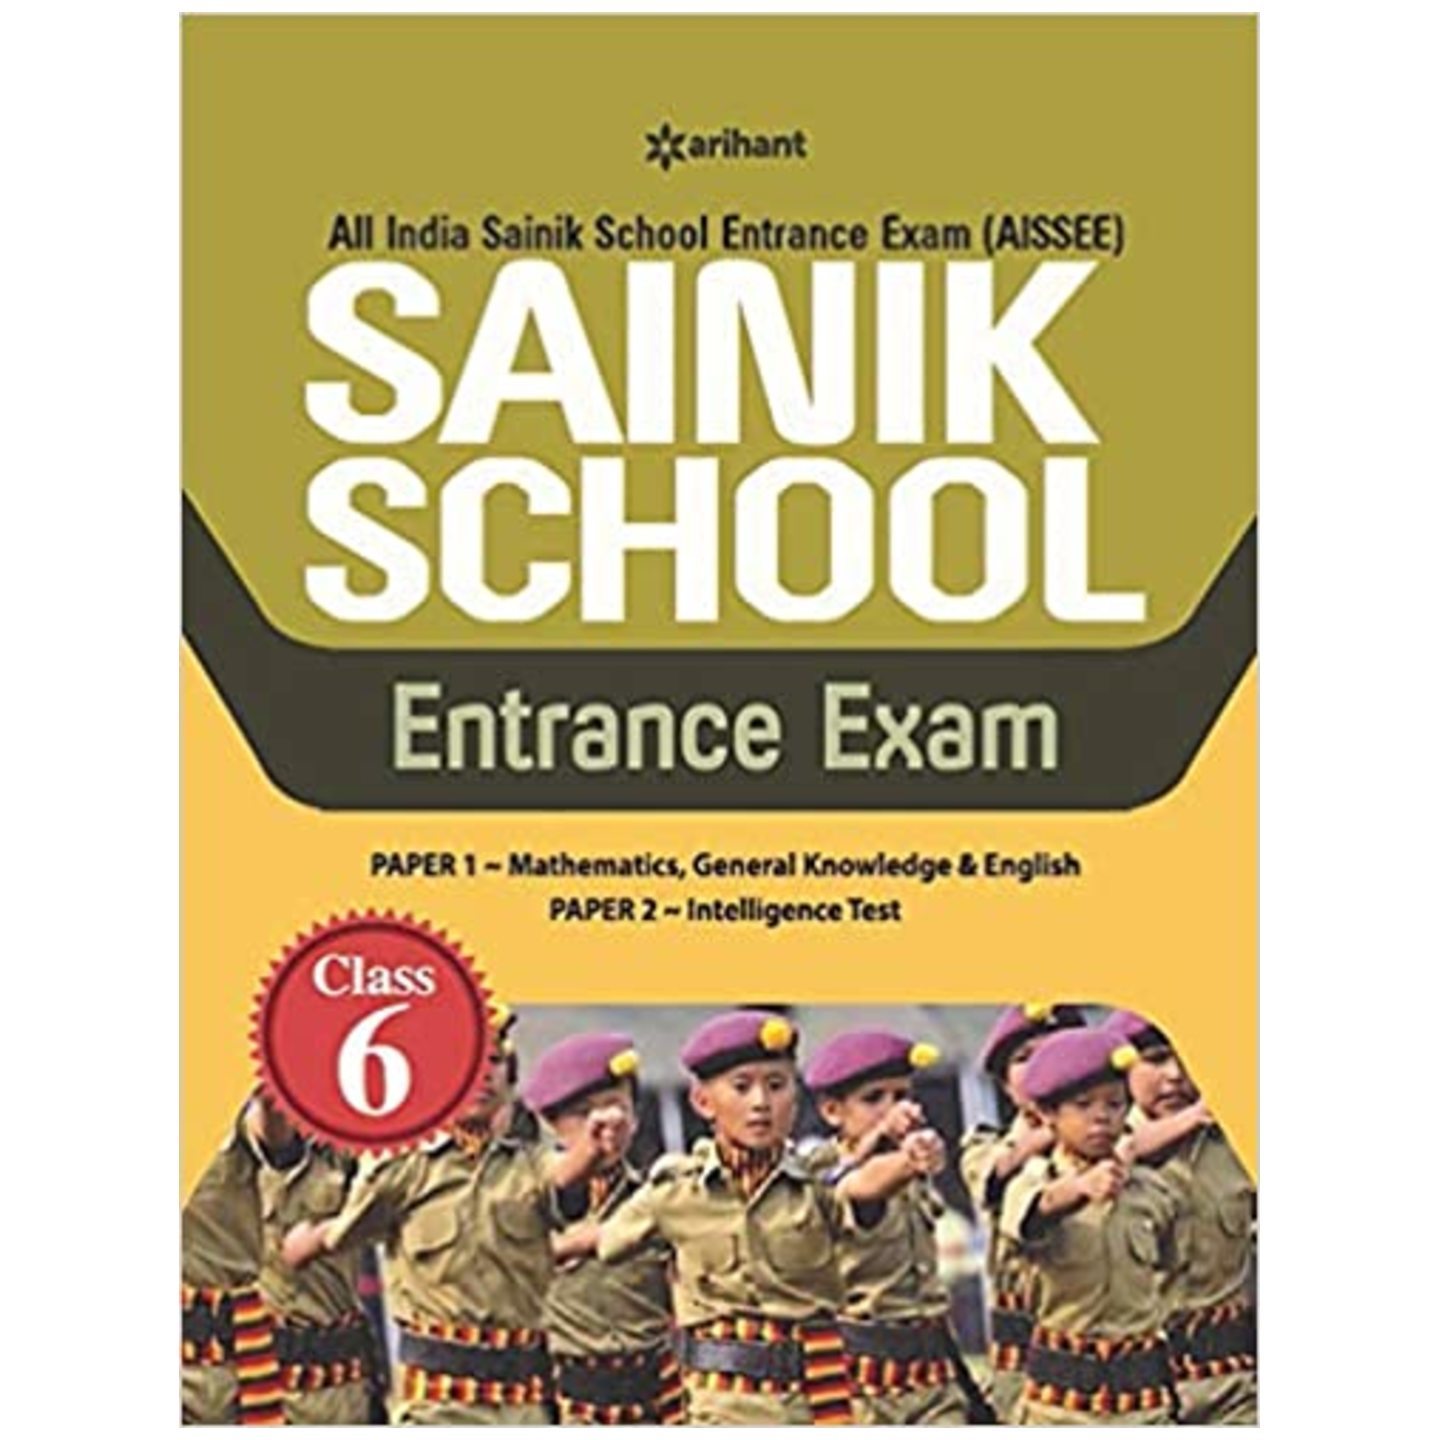 ARIHANT Sainik School Class 6 Entrance Exam Guide Book AISSEE